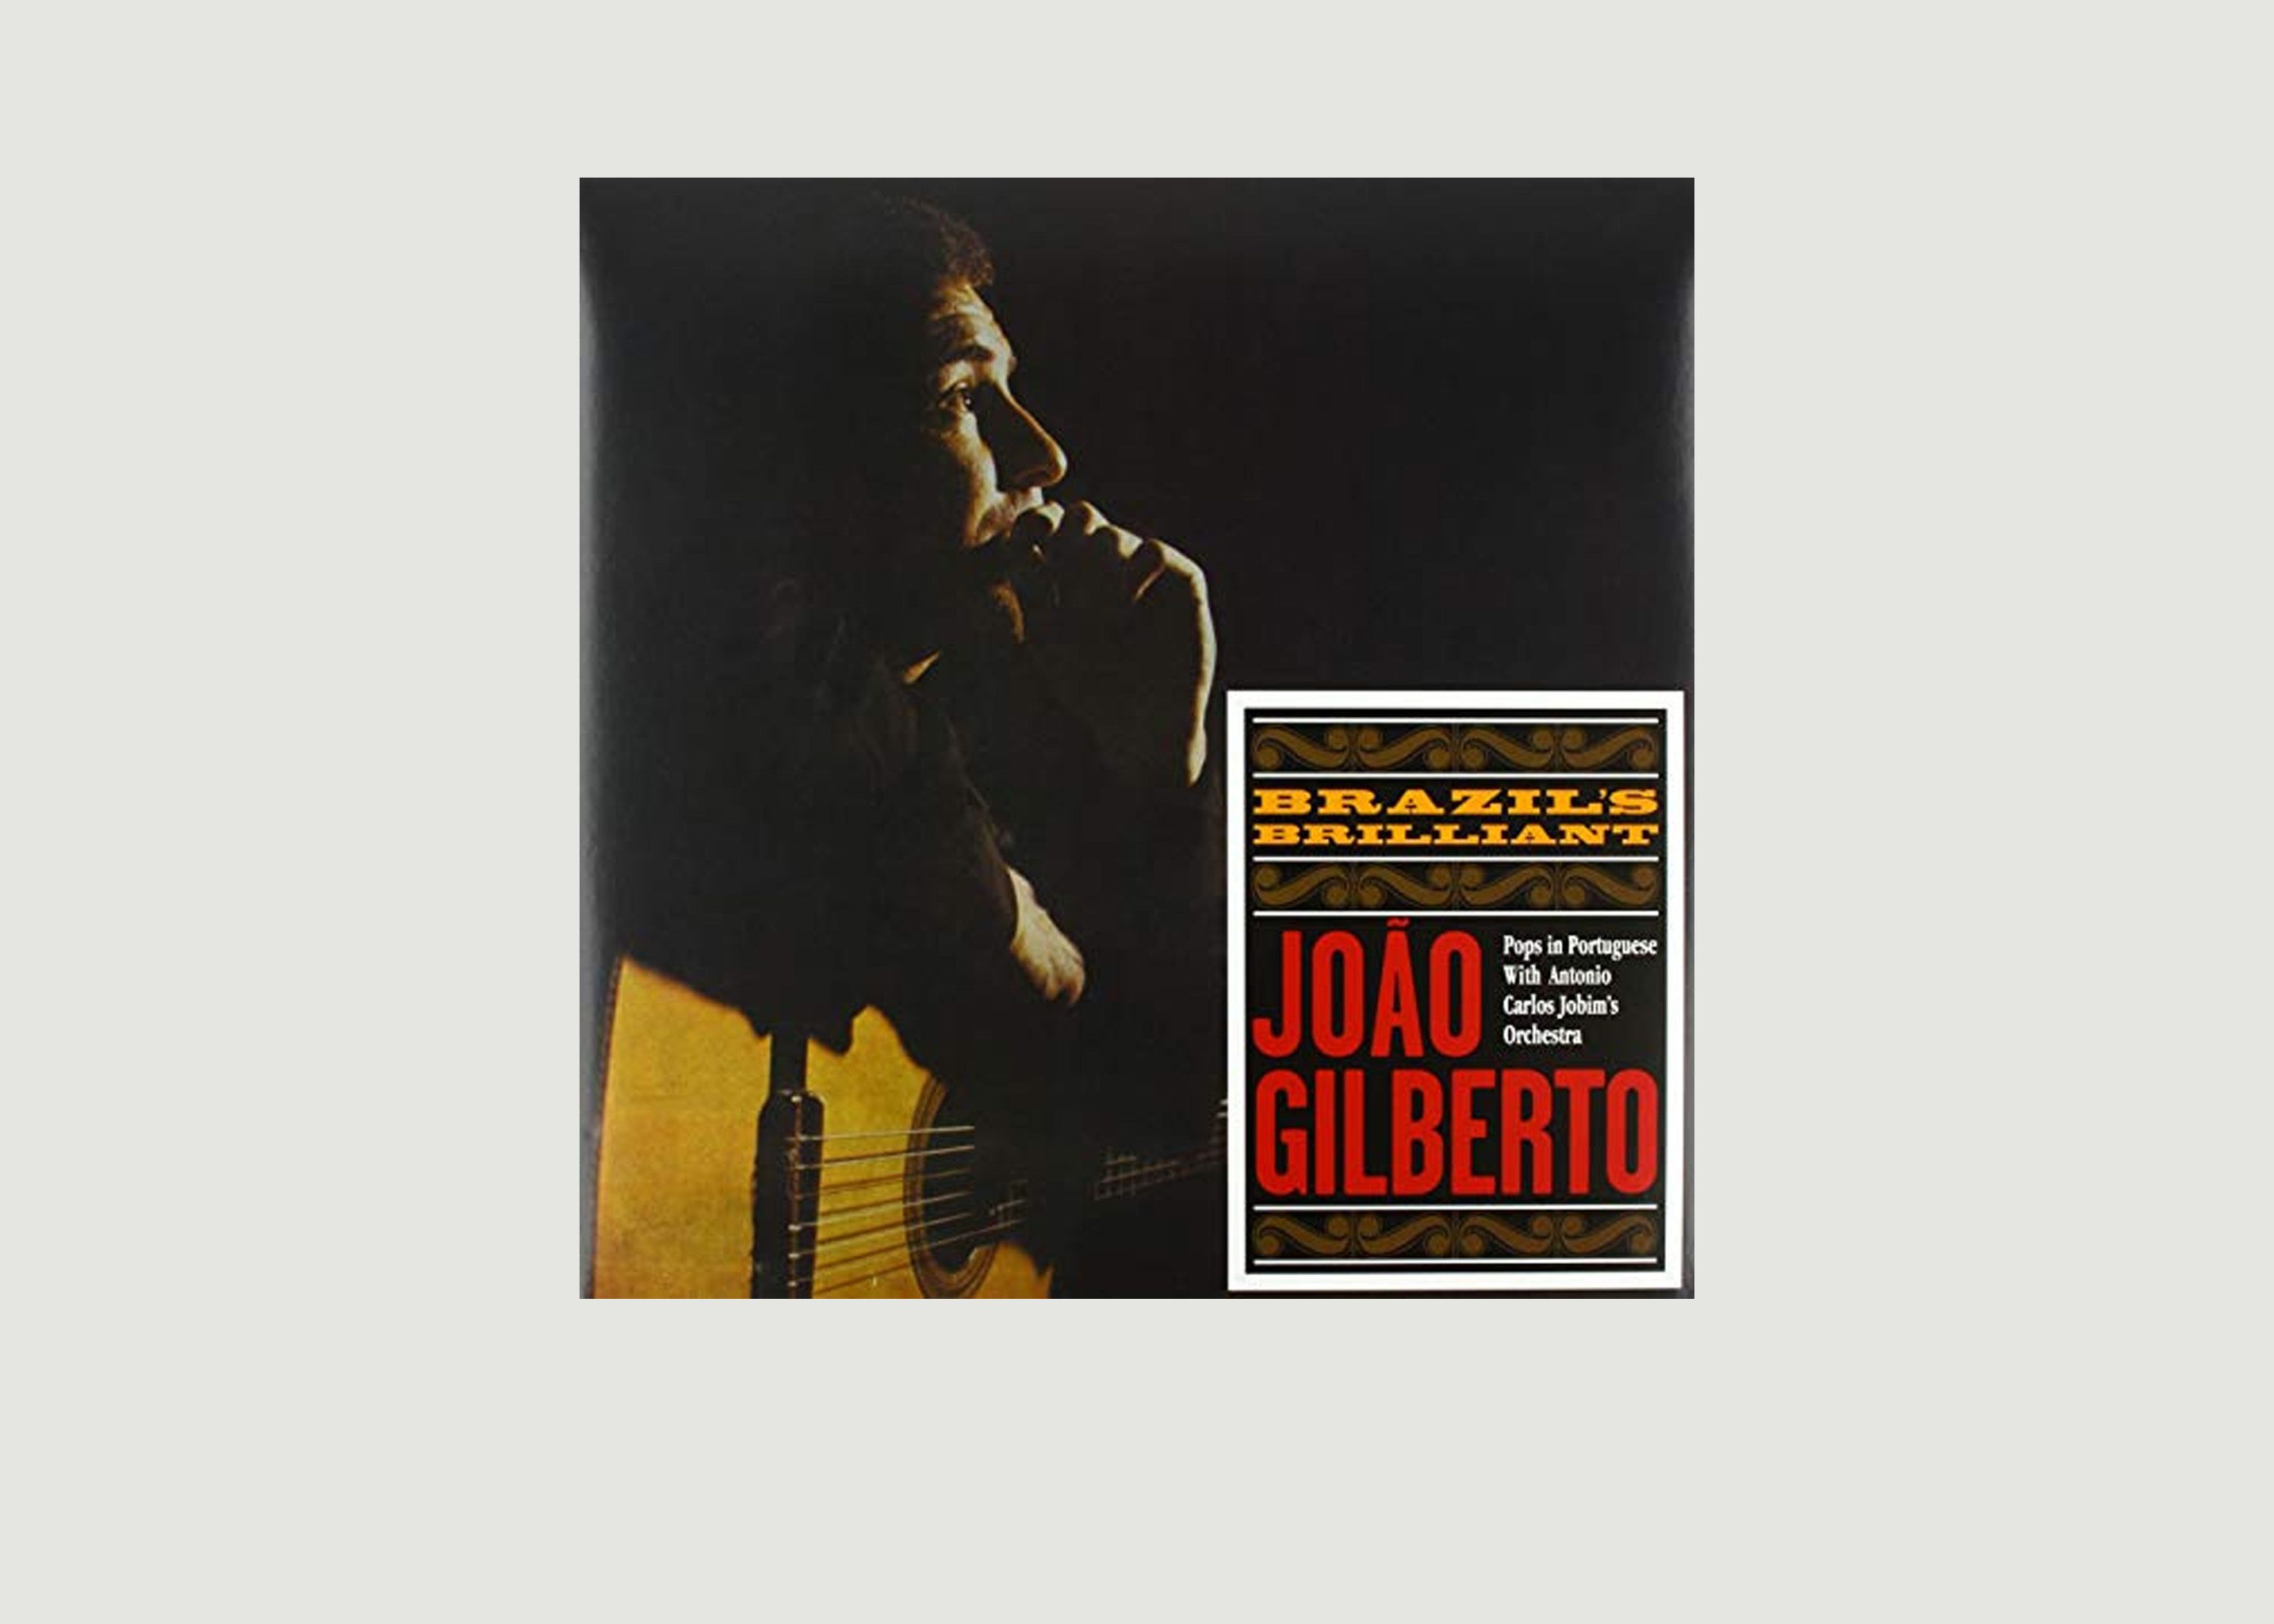 Brasiliens Genialer - Joao Gilberto - La vinyl-thèque idéale